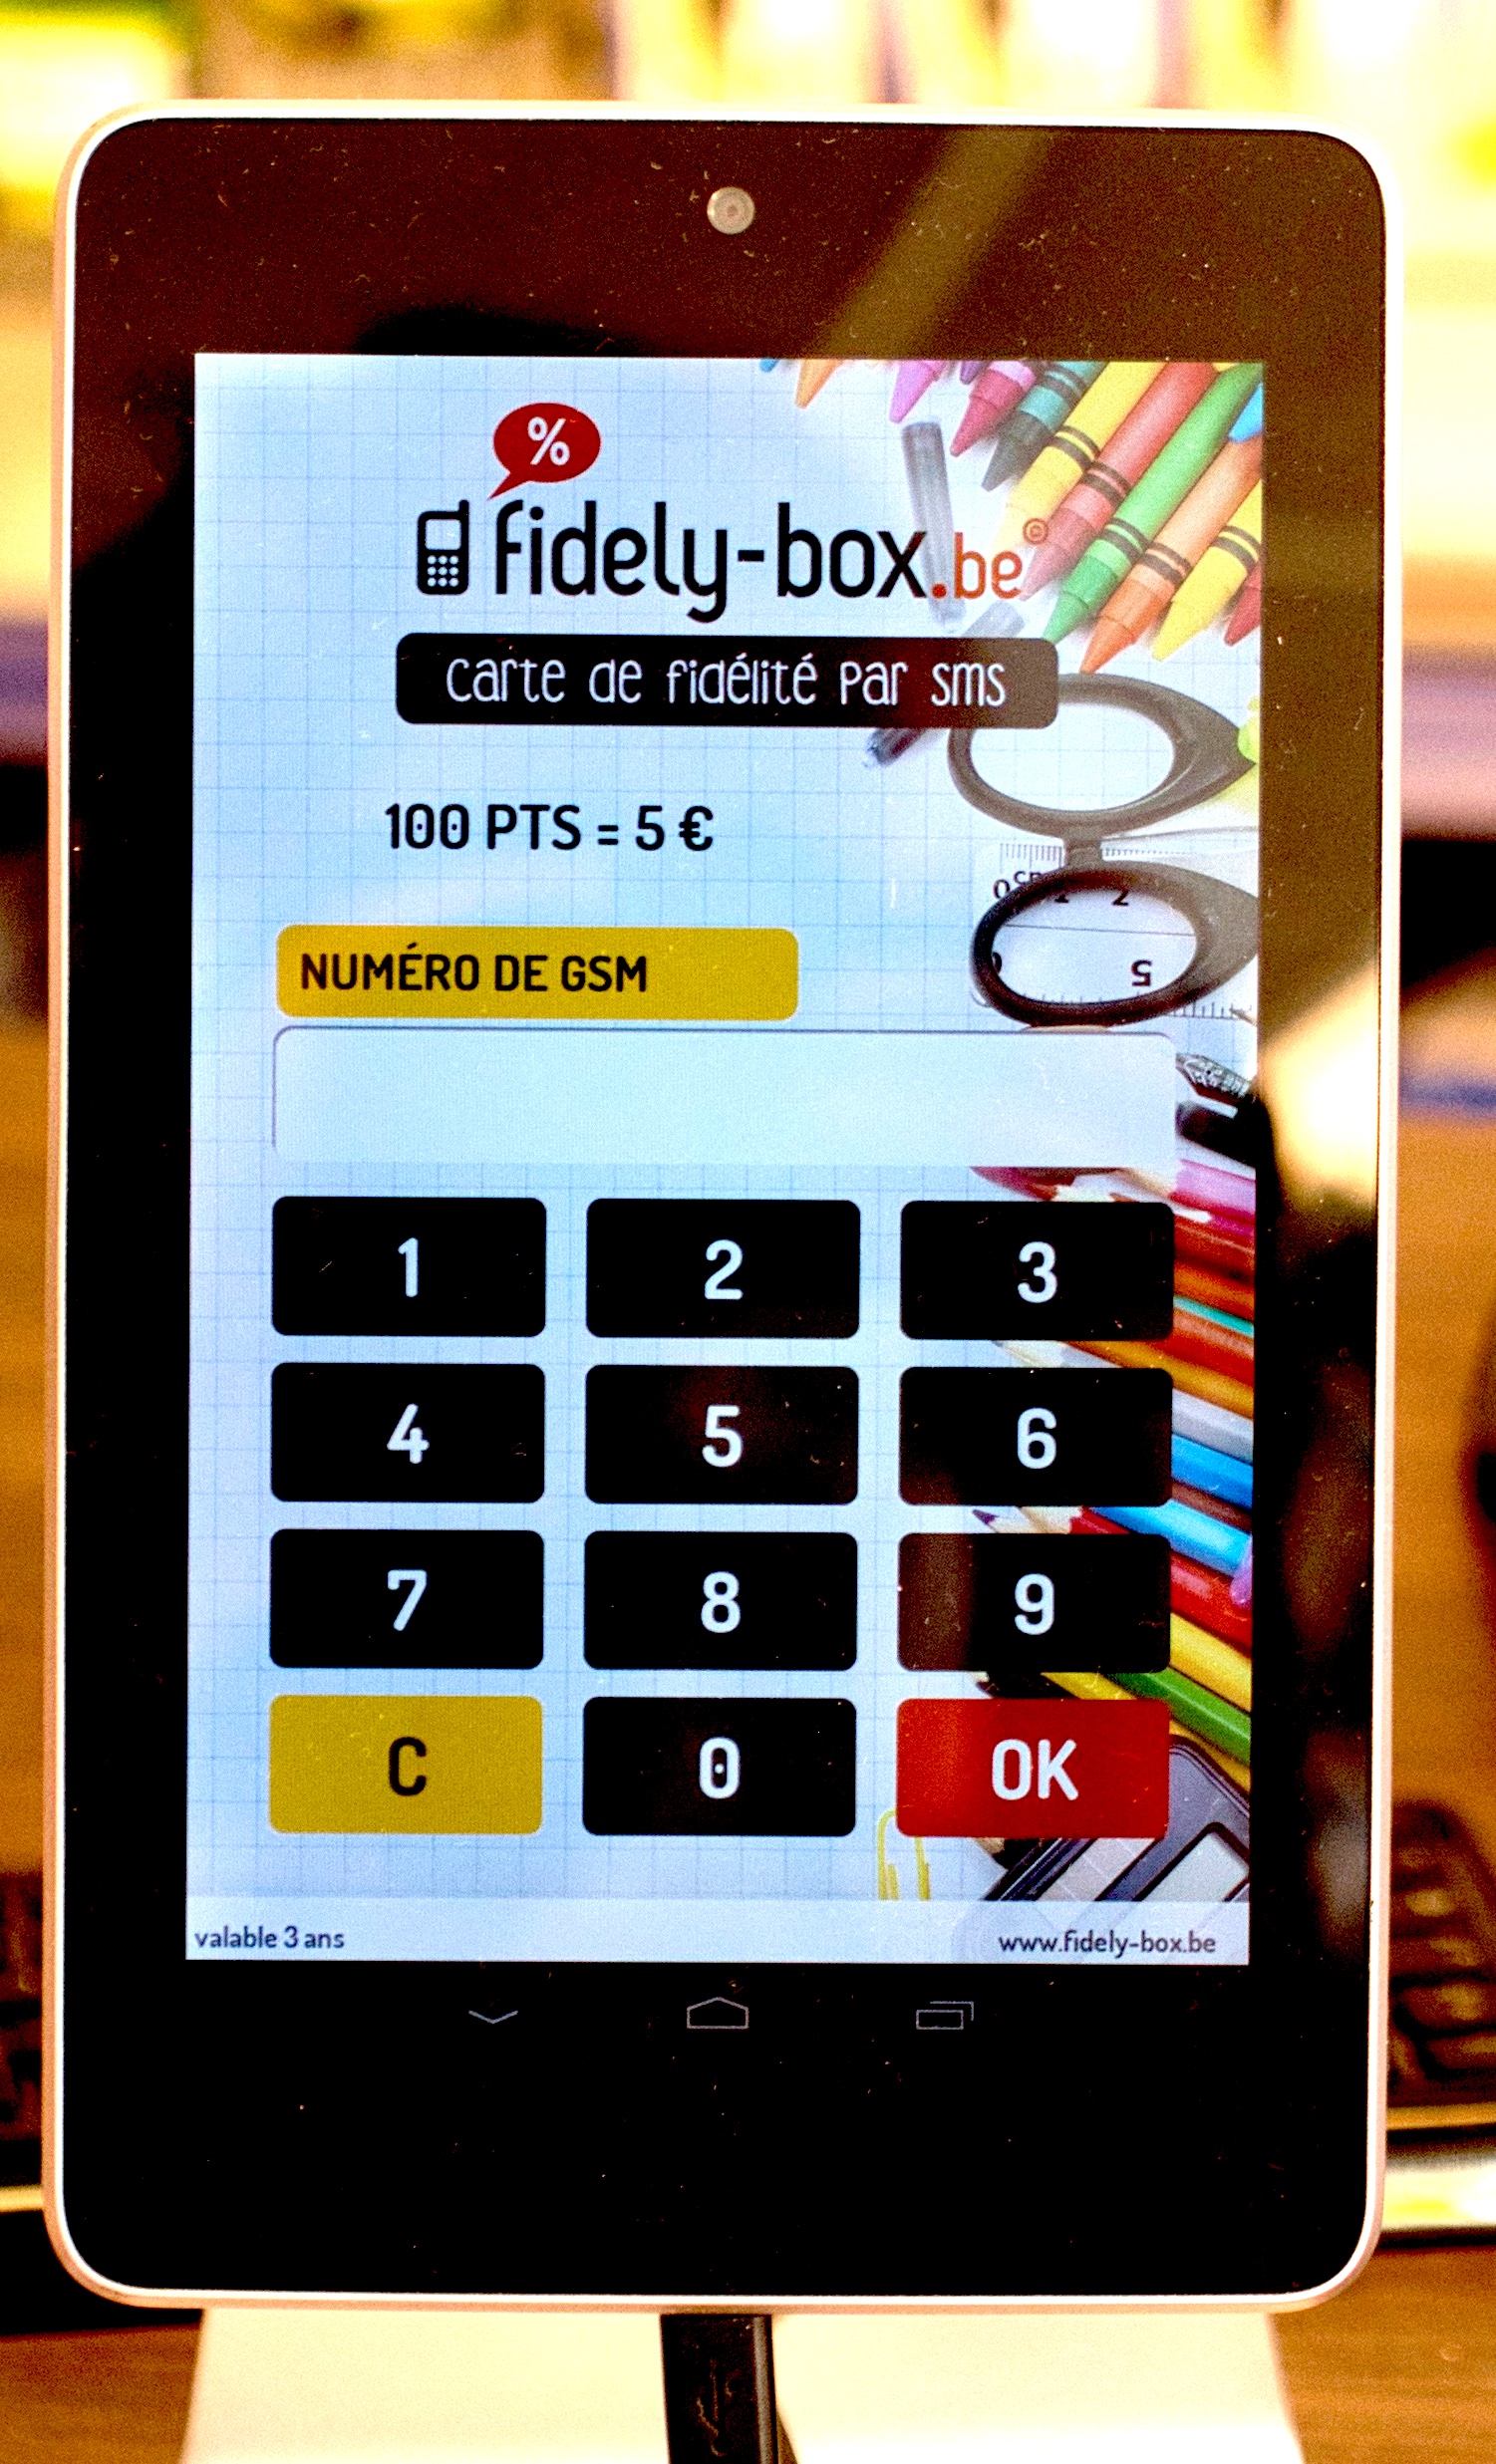 Fidely-box